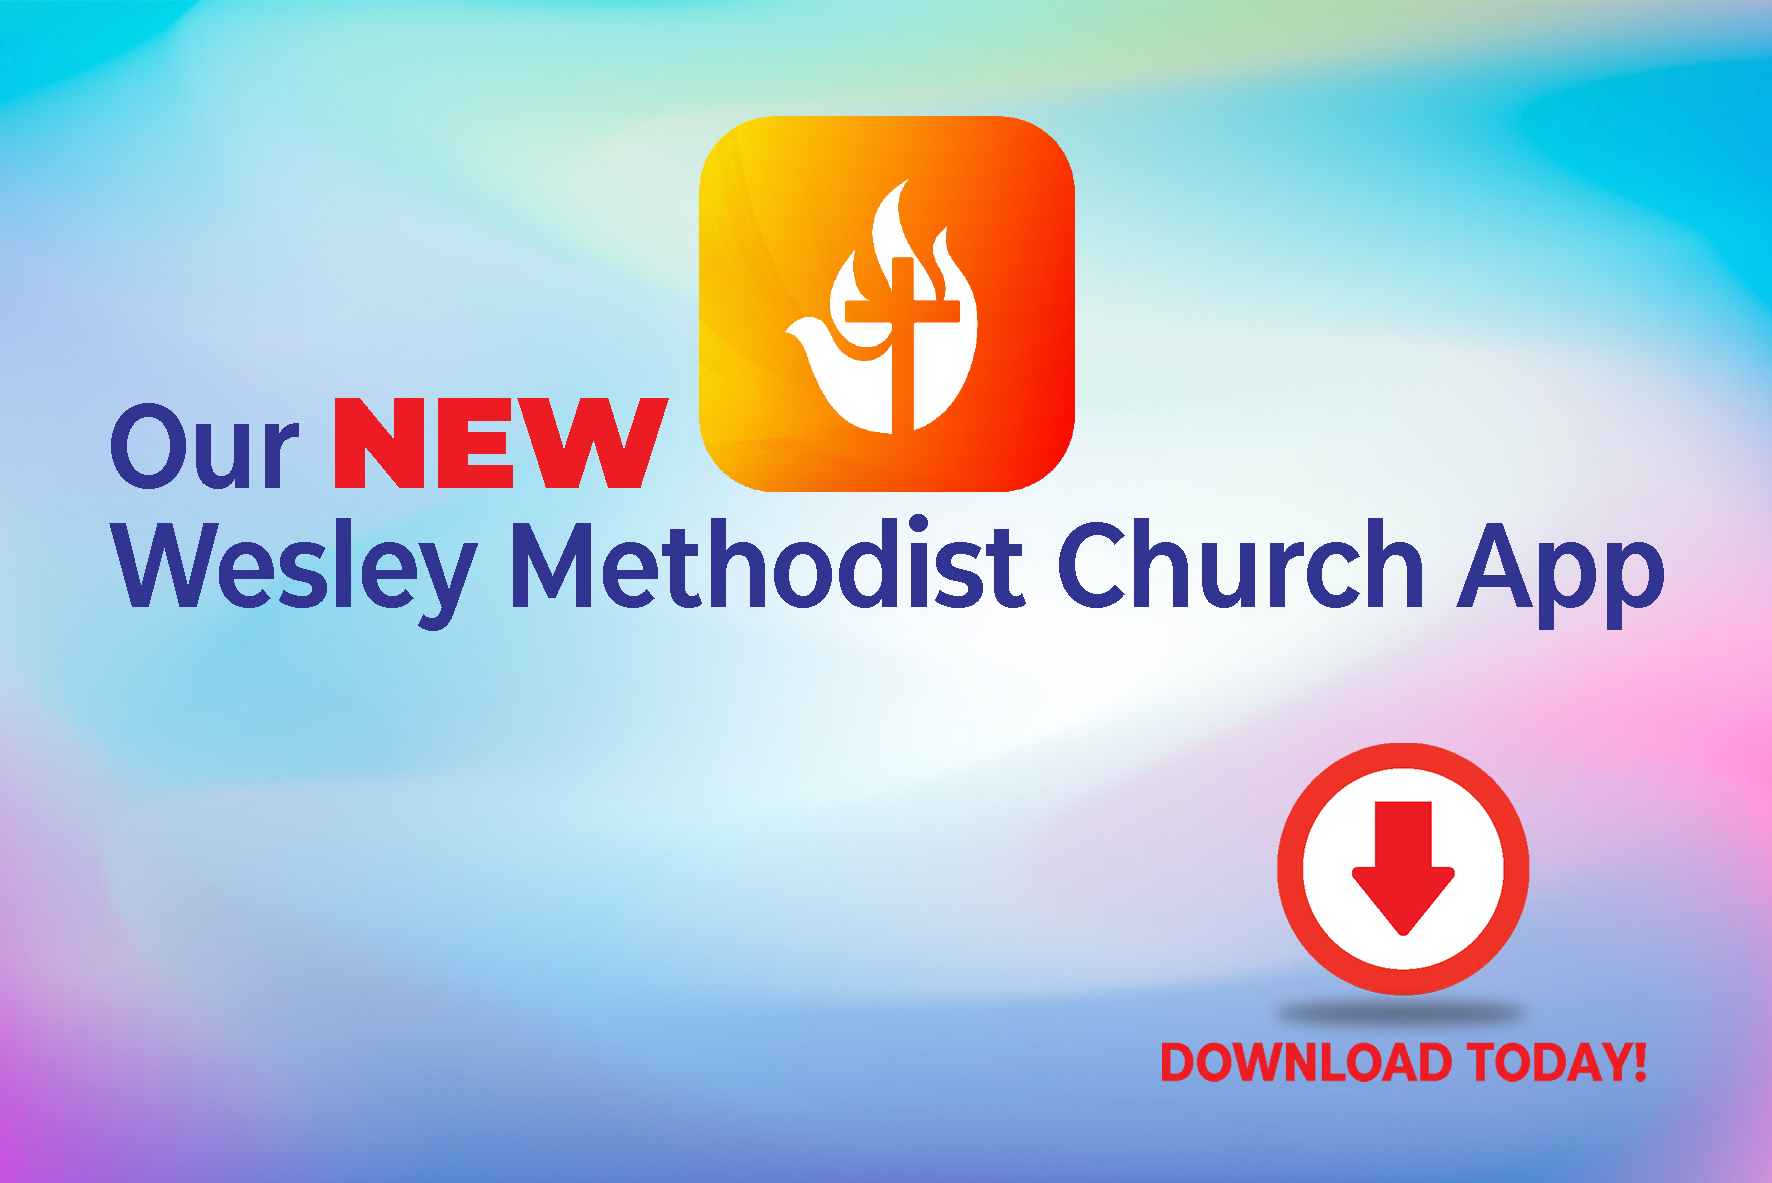 NEW! Wesley Methodist Church App